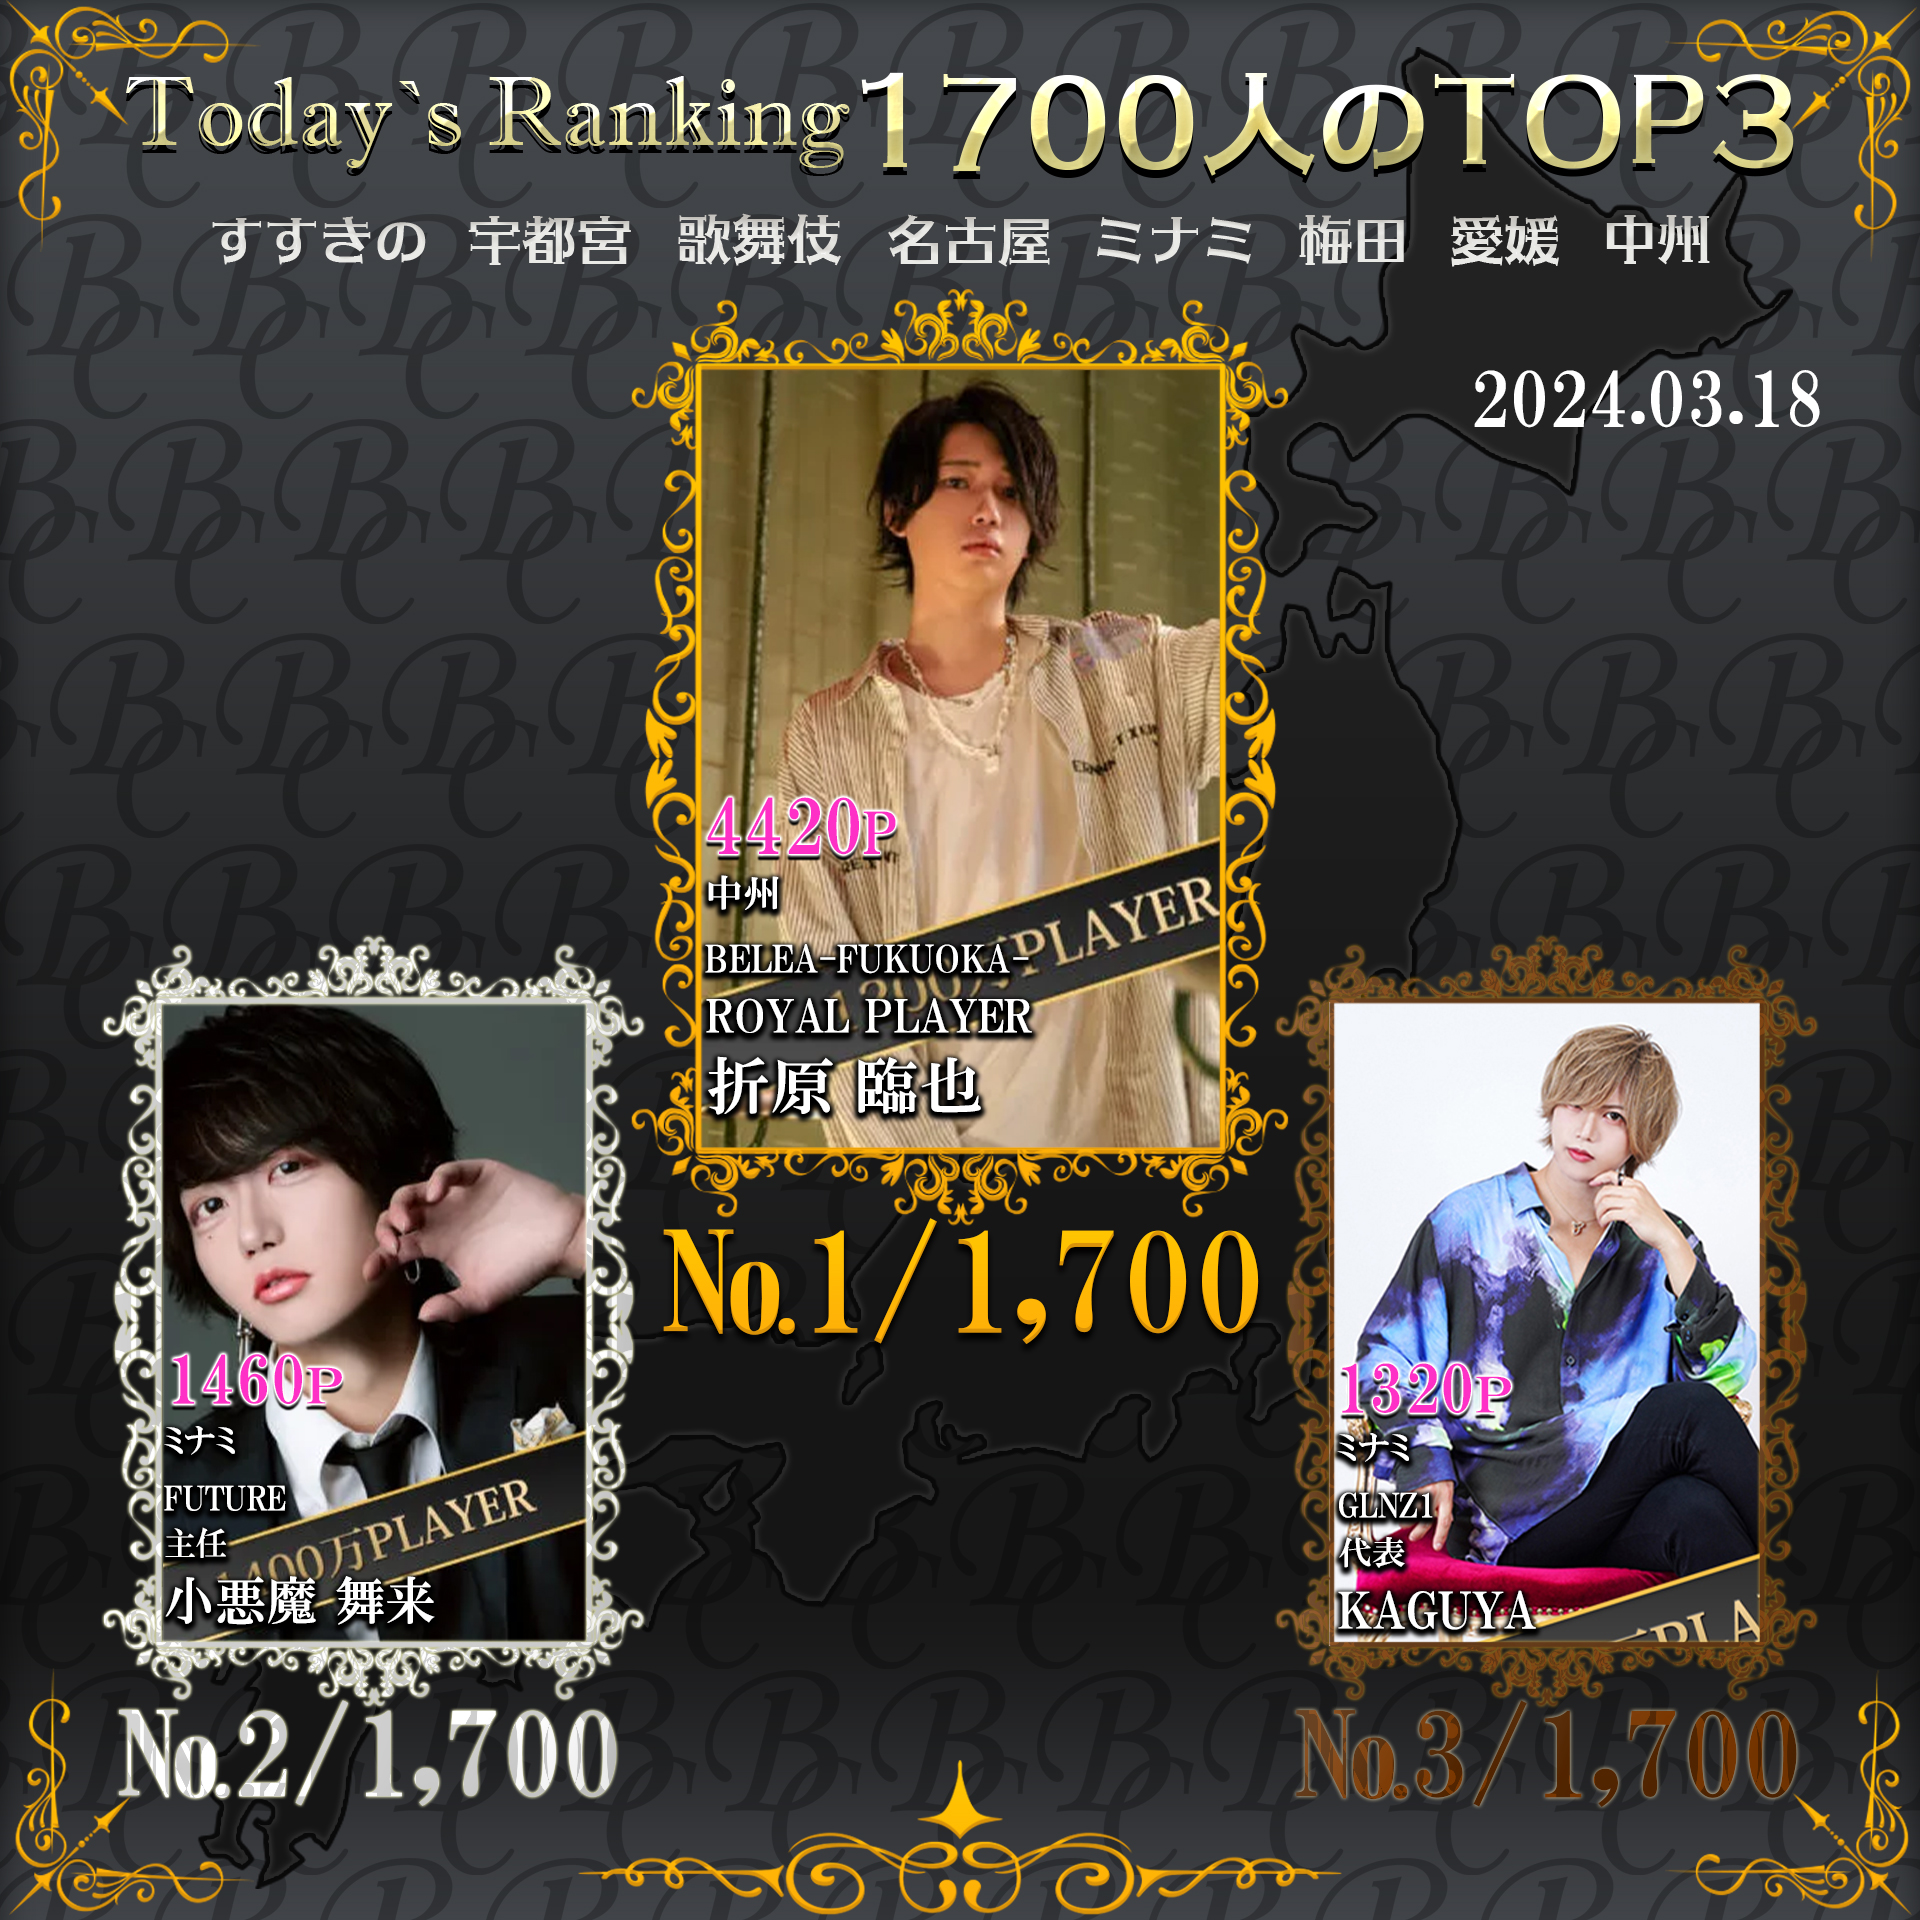 3/18 Today’s Ranking